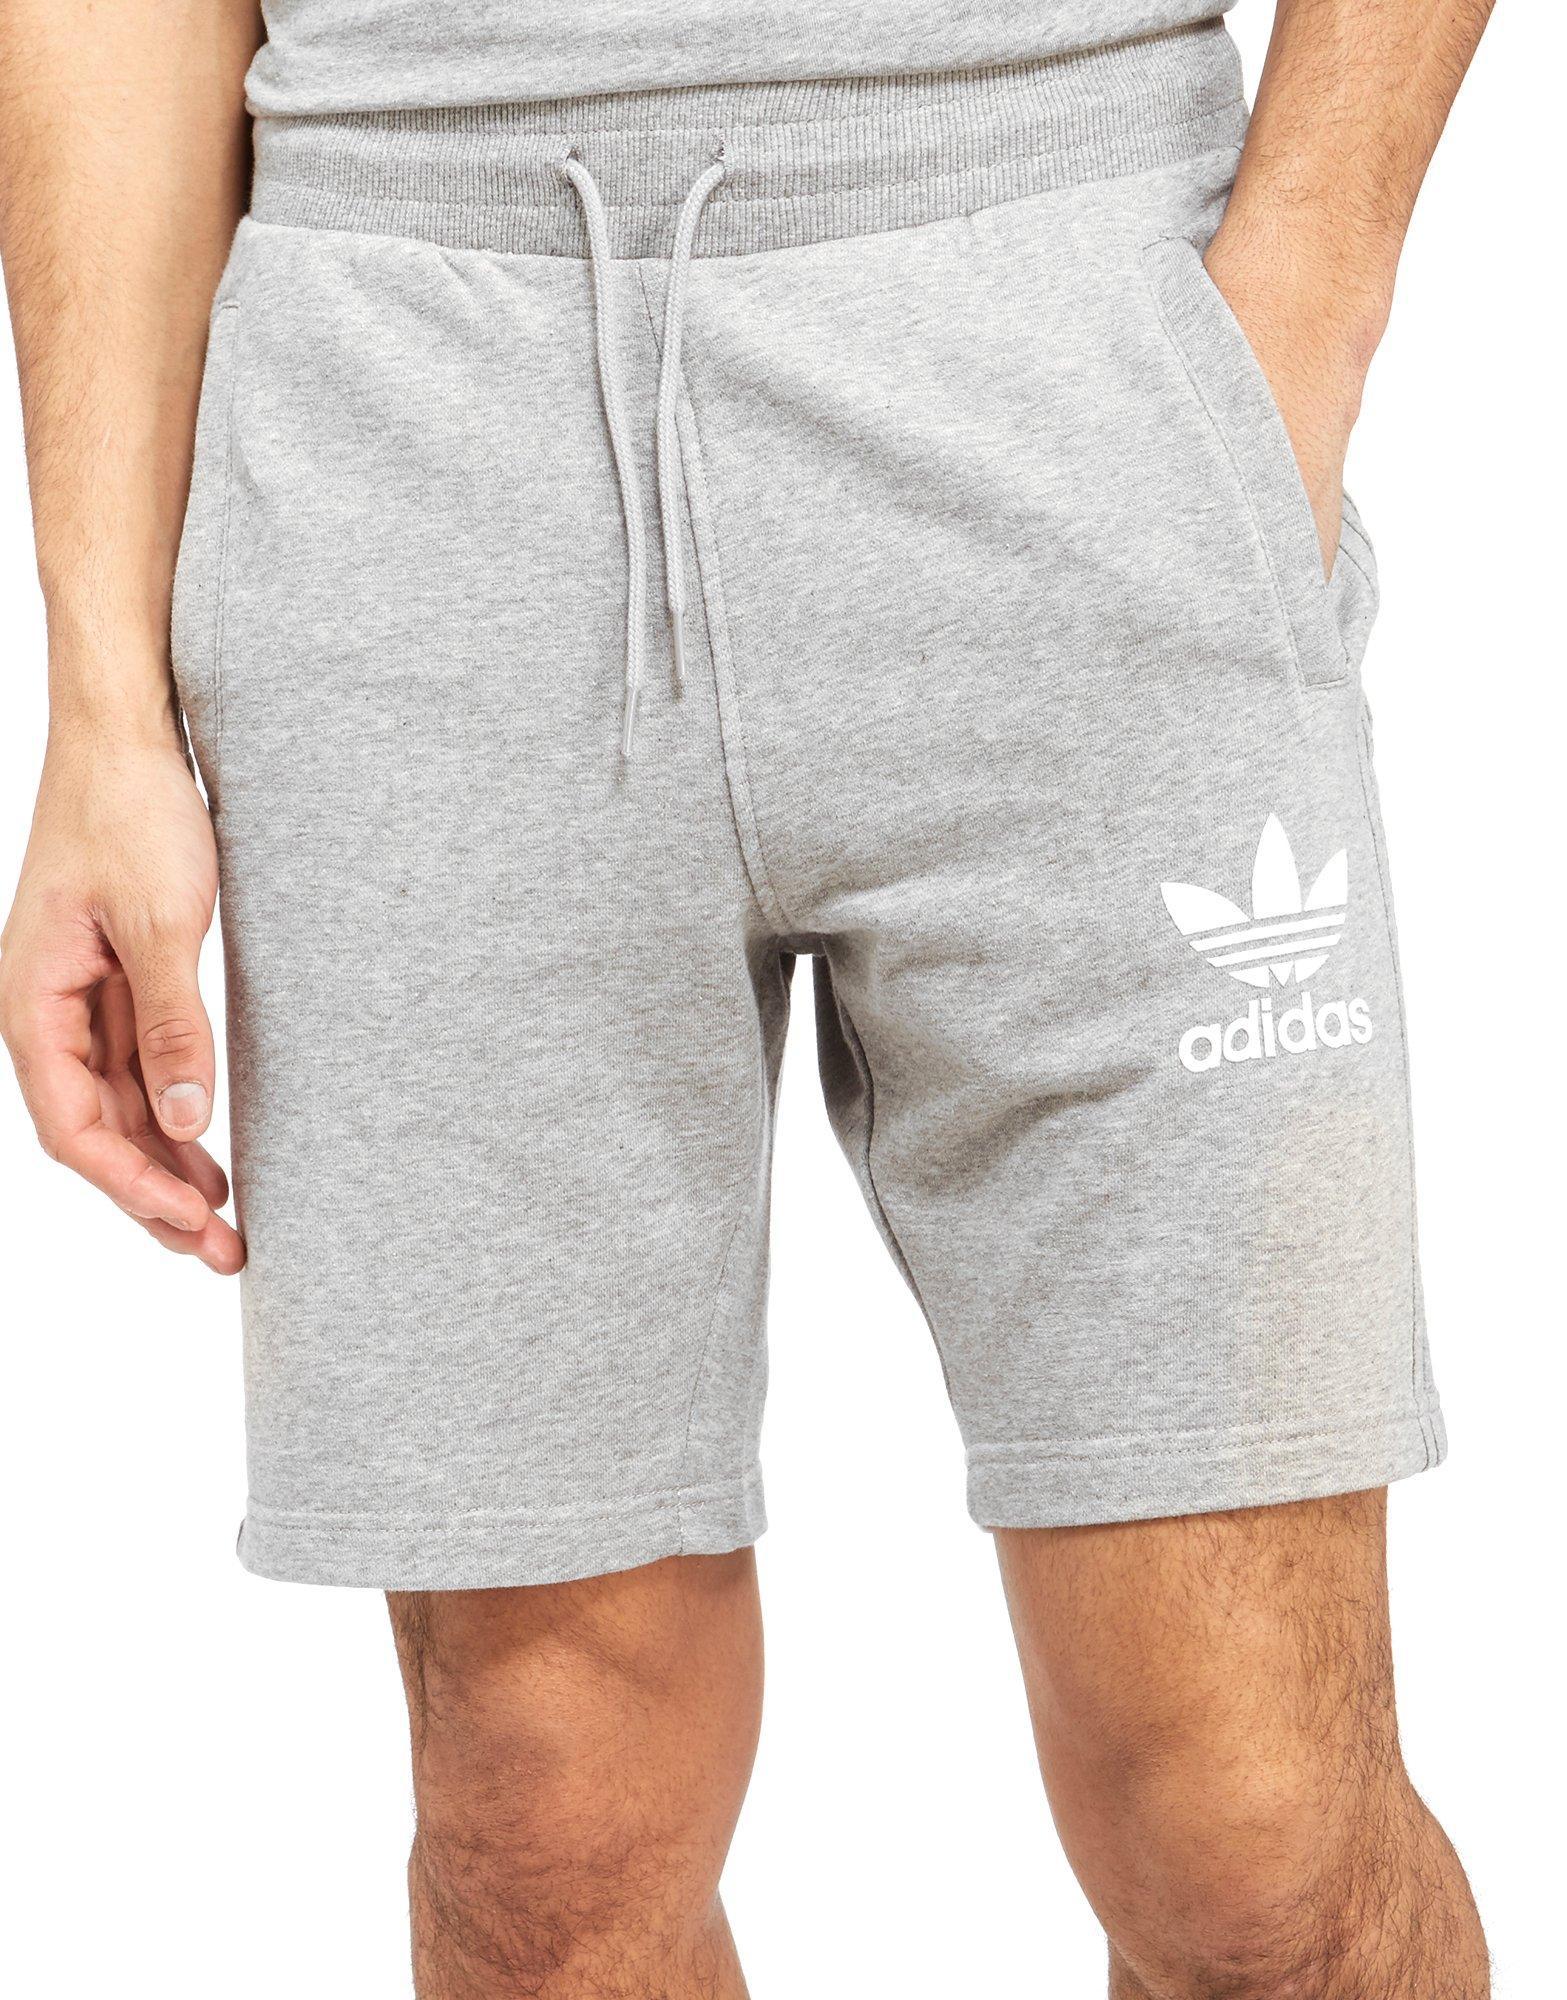 Lyst - Adidas Originals California Shorts in Gray for Men